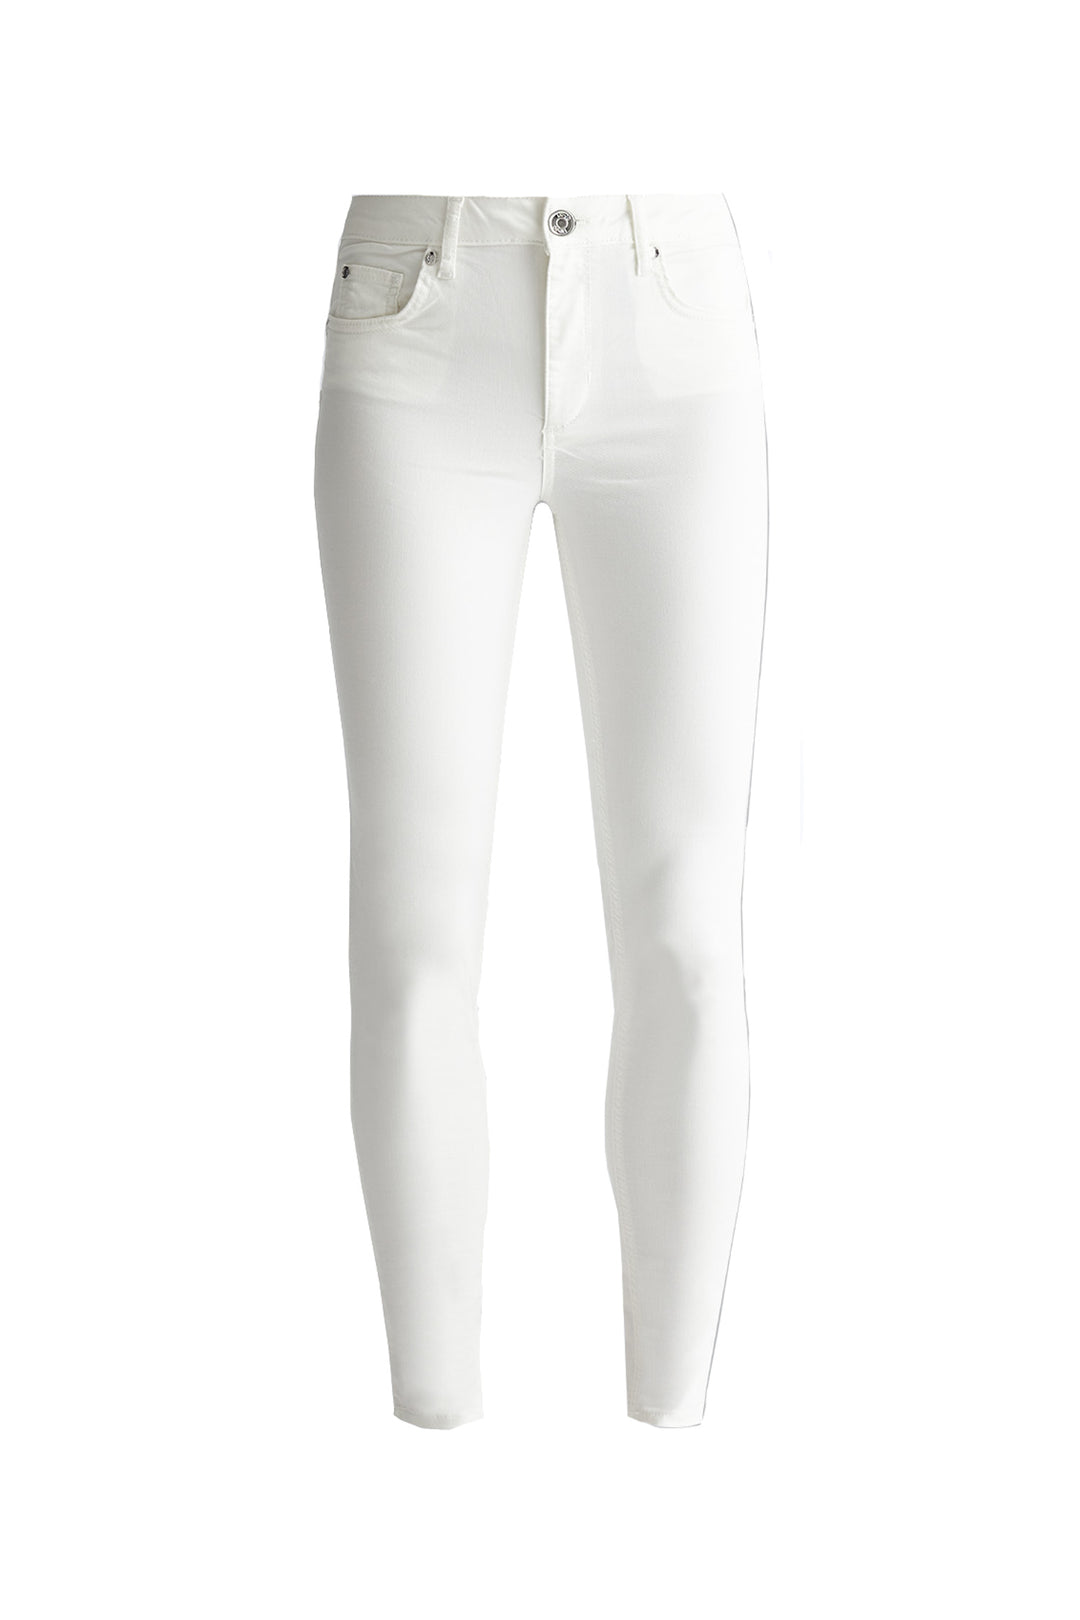 LIU JO Pantaloni bottom up bianco lana a vita alta in cotone stretch - Mancinelli 1954